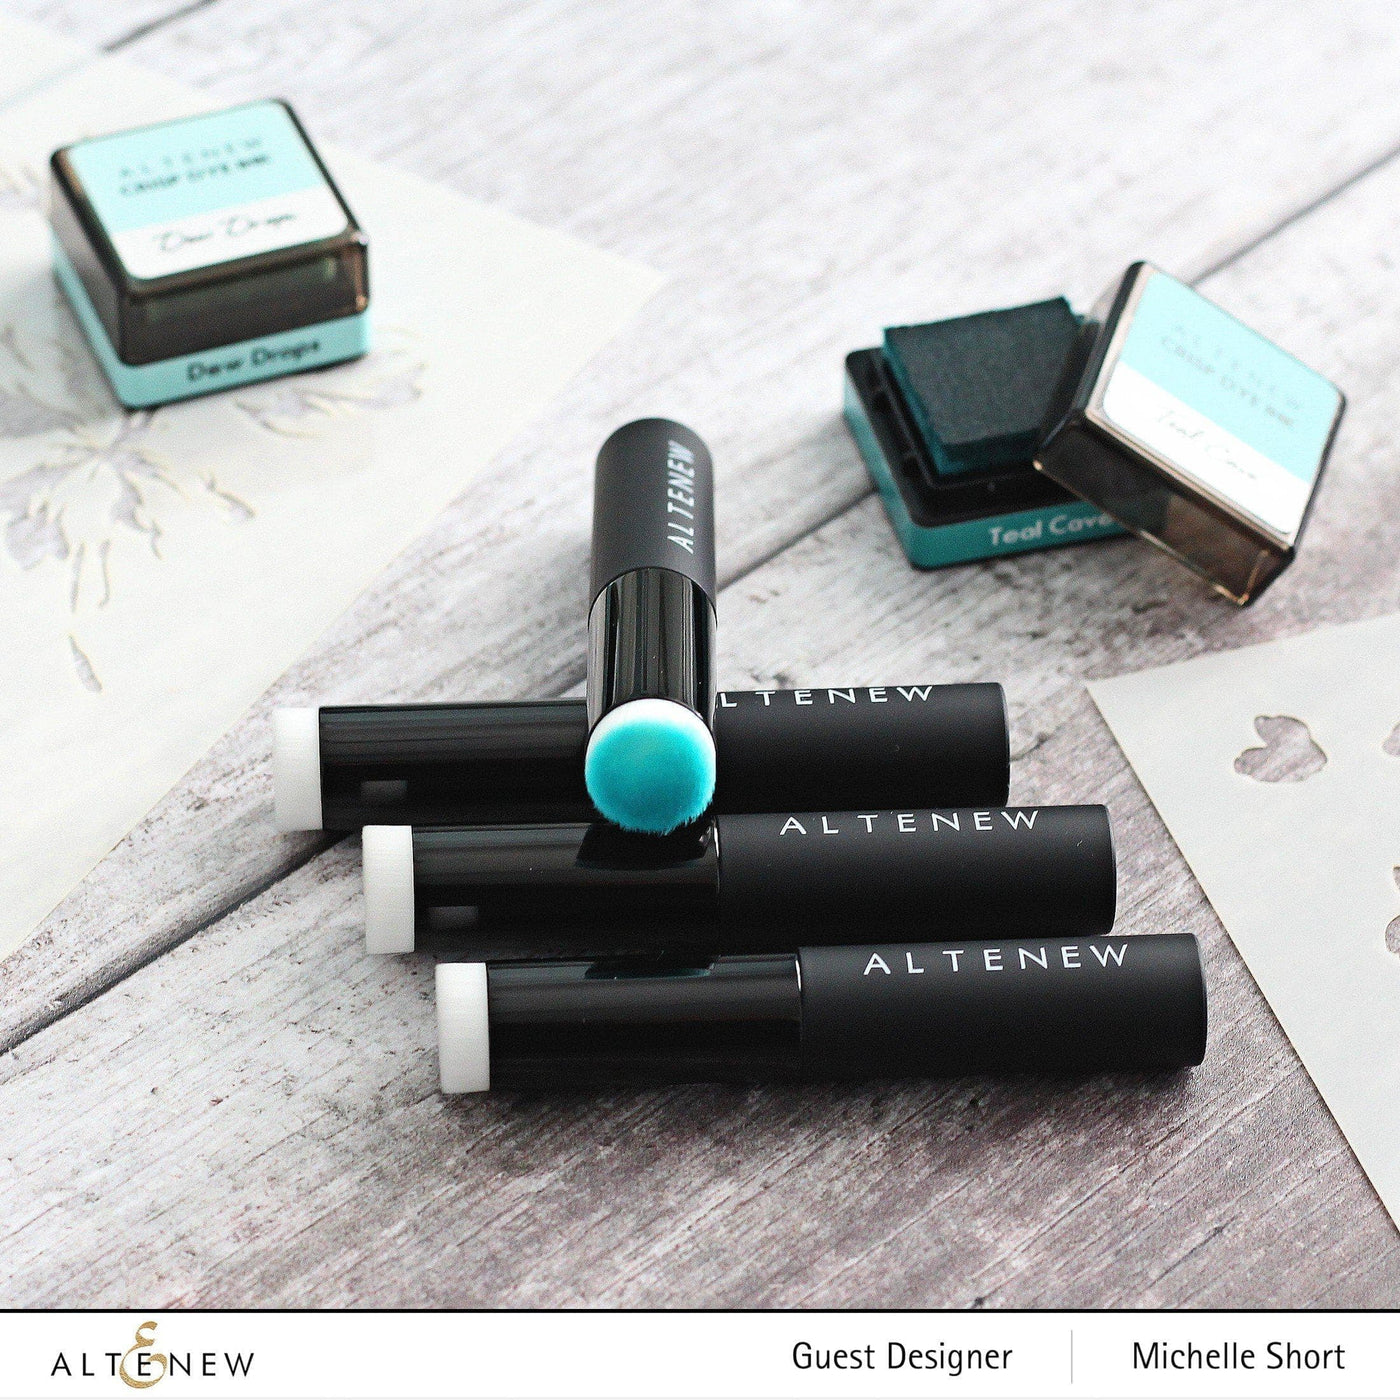 Shenzhen Gracedo Makeup-accessories Co. Tools Mini Blending Brush Set